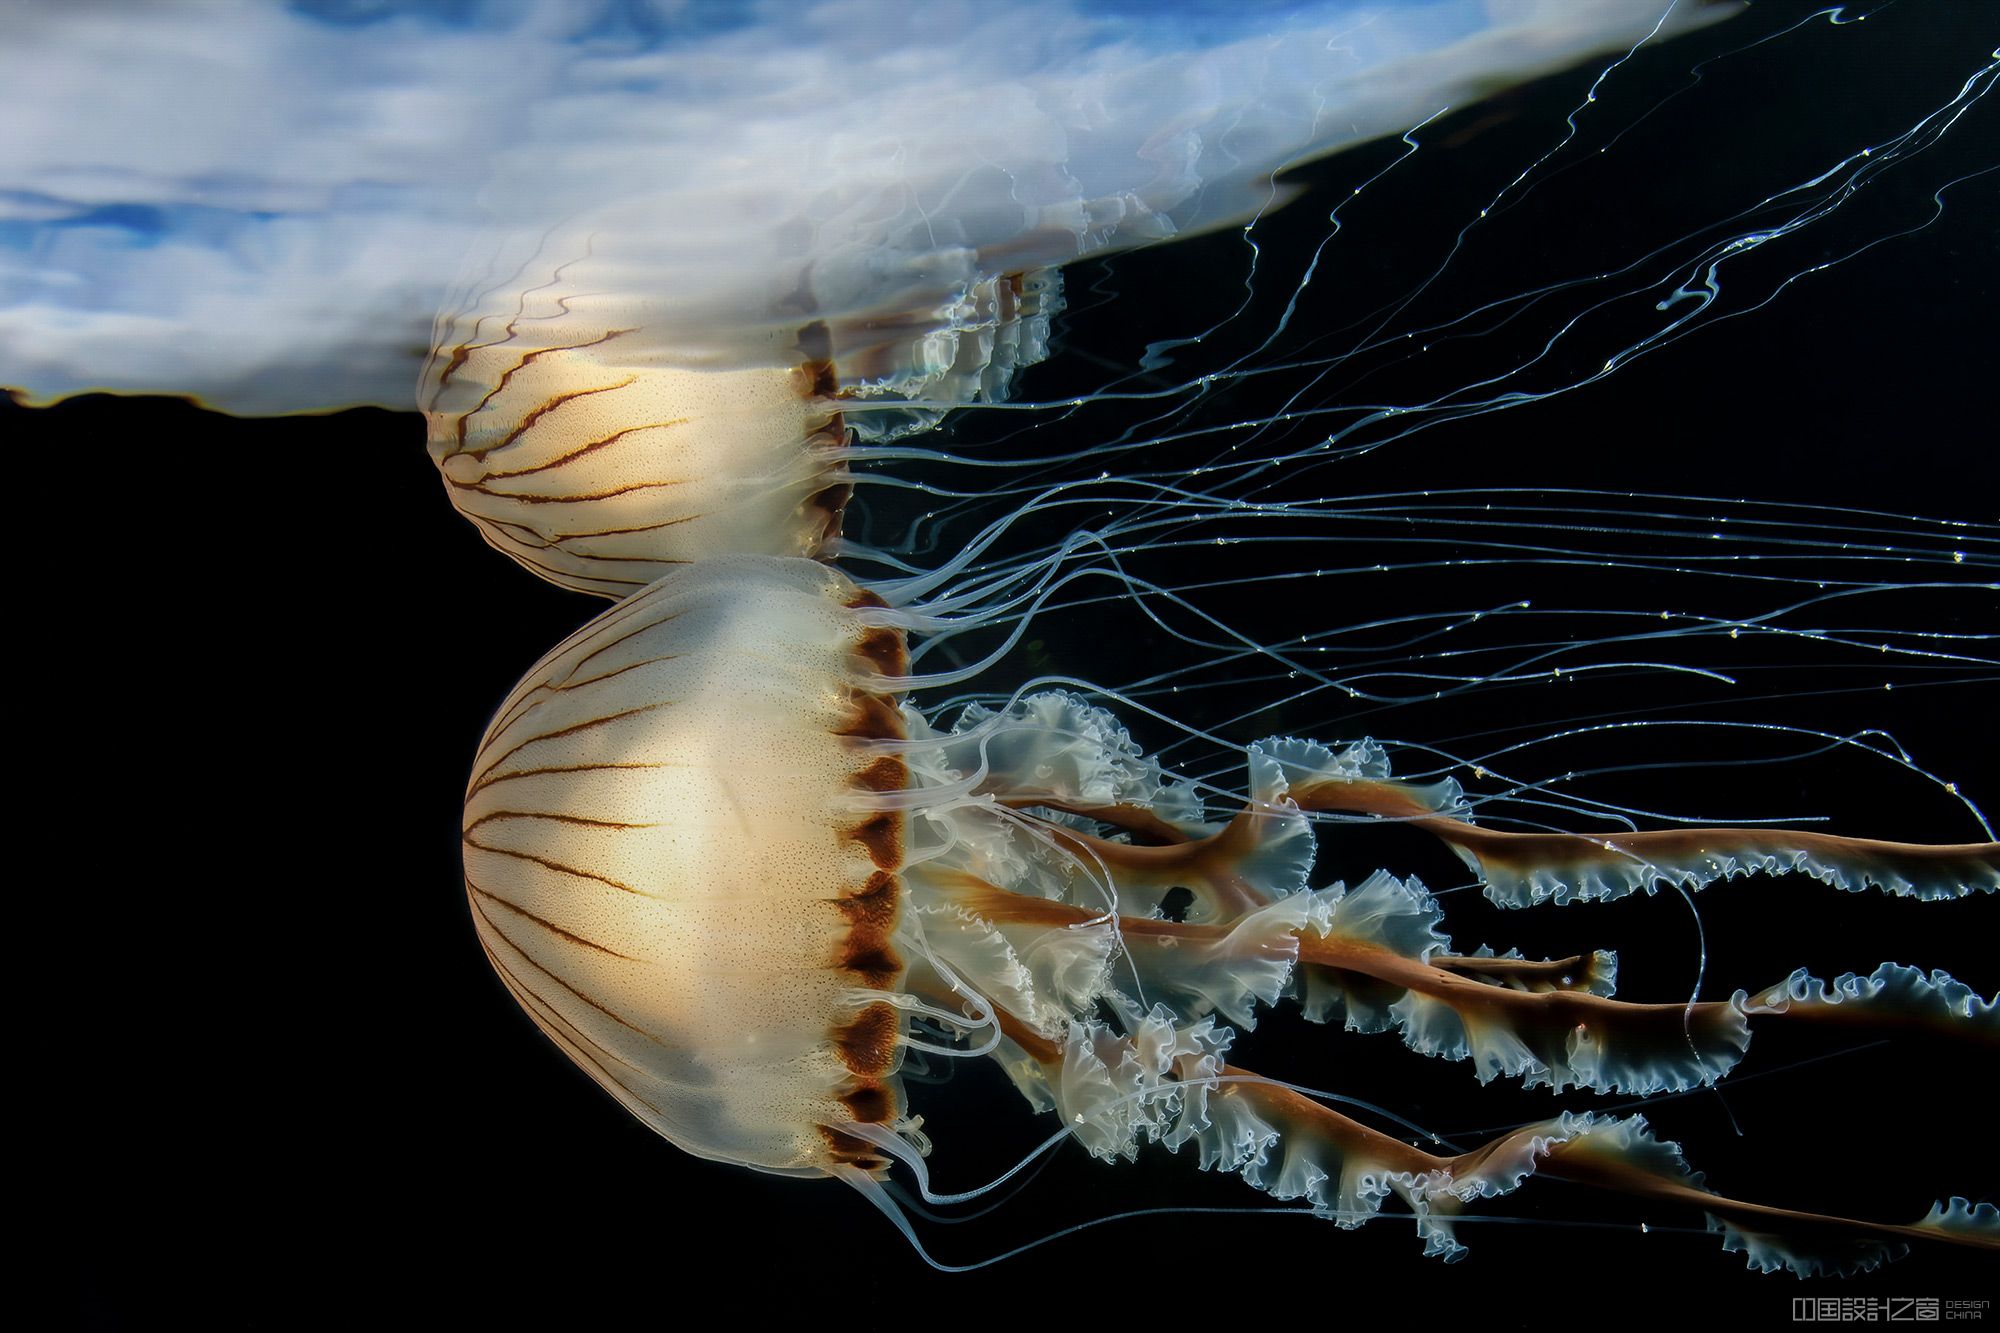 An underwater photo of jellyfish